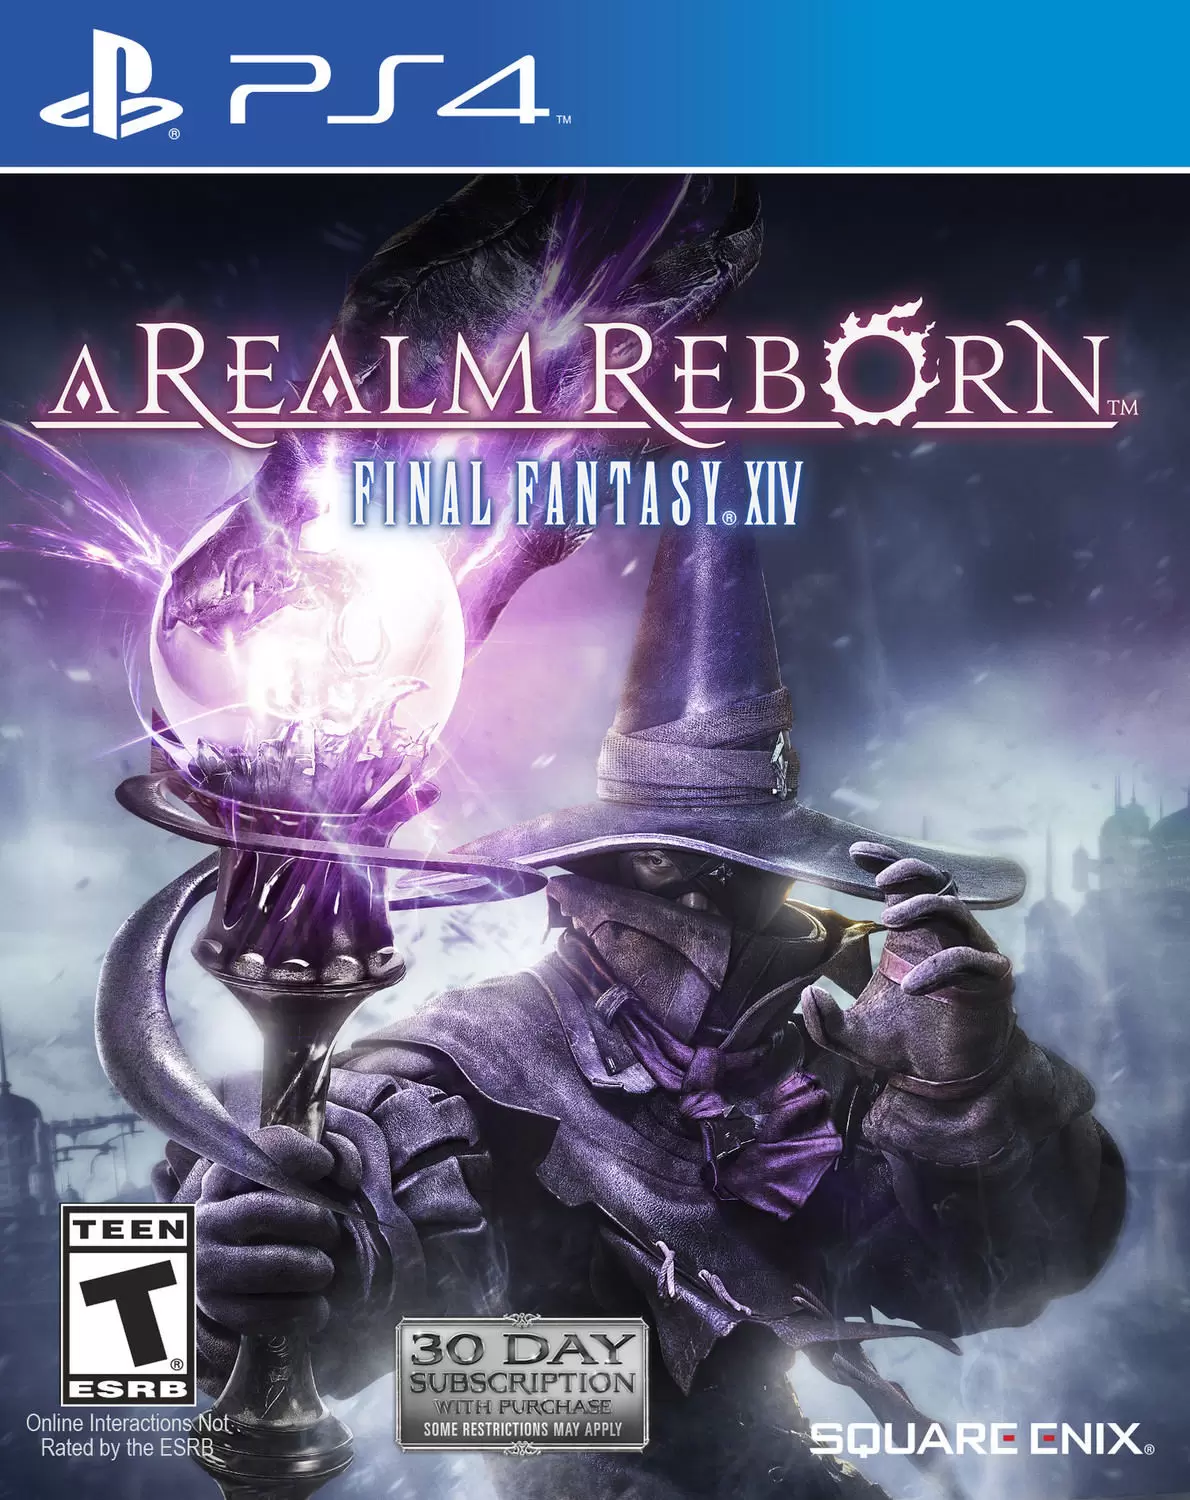 PS4 Games - Final Fantasy XIV Online: A Realm Reborn